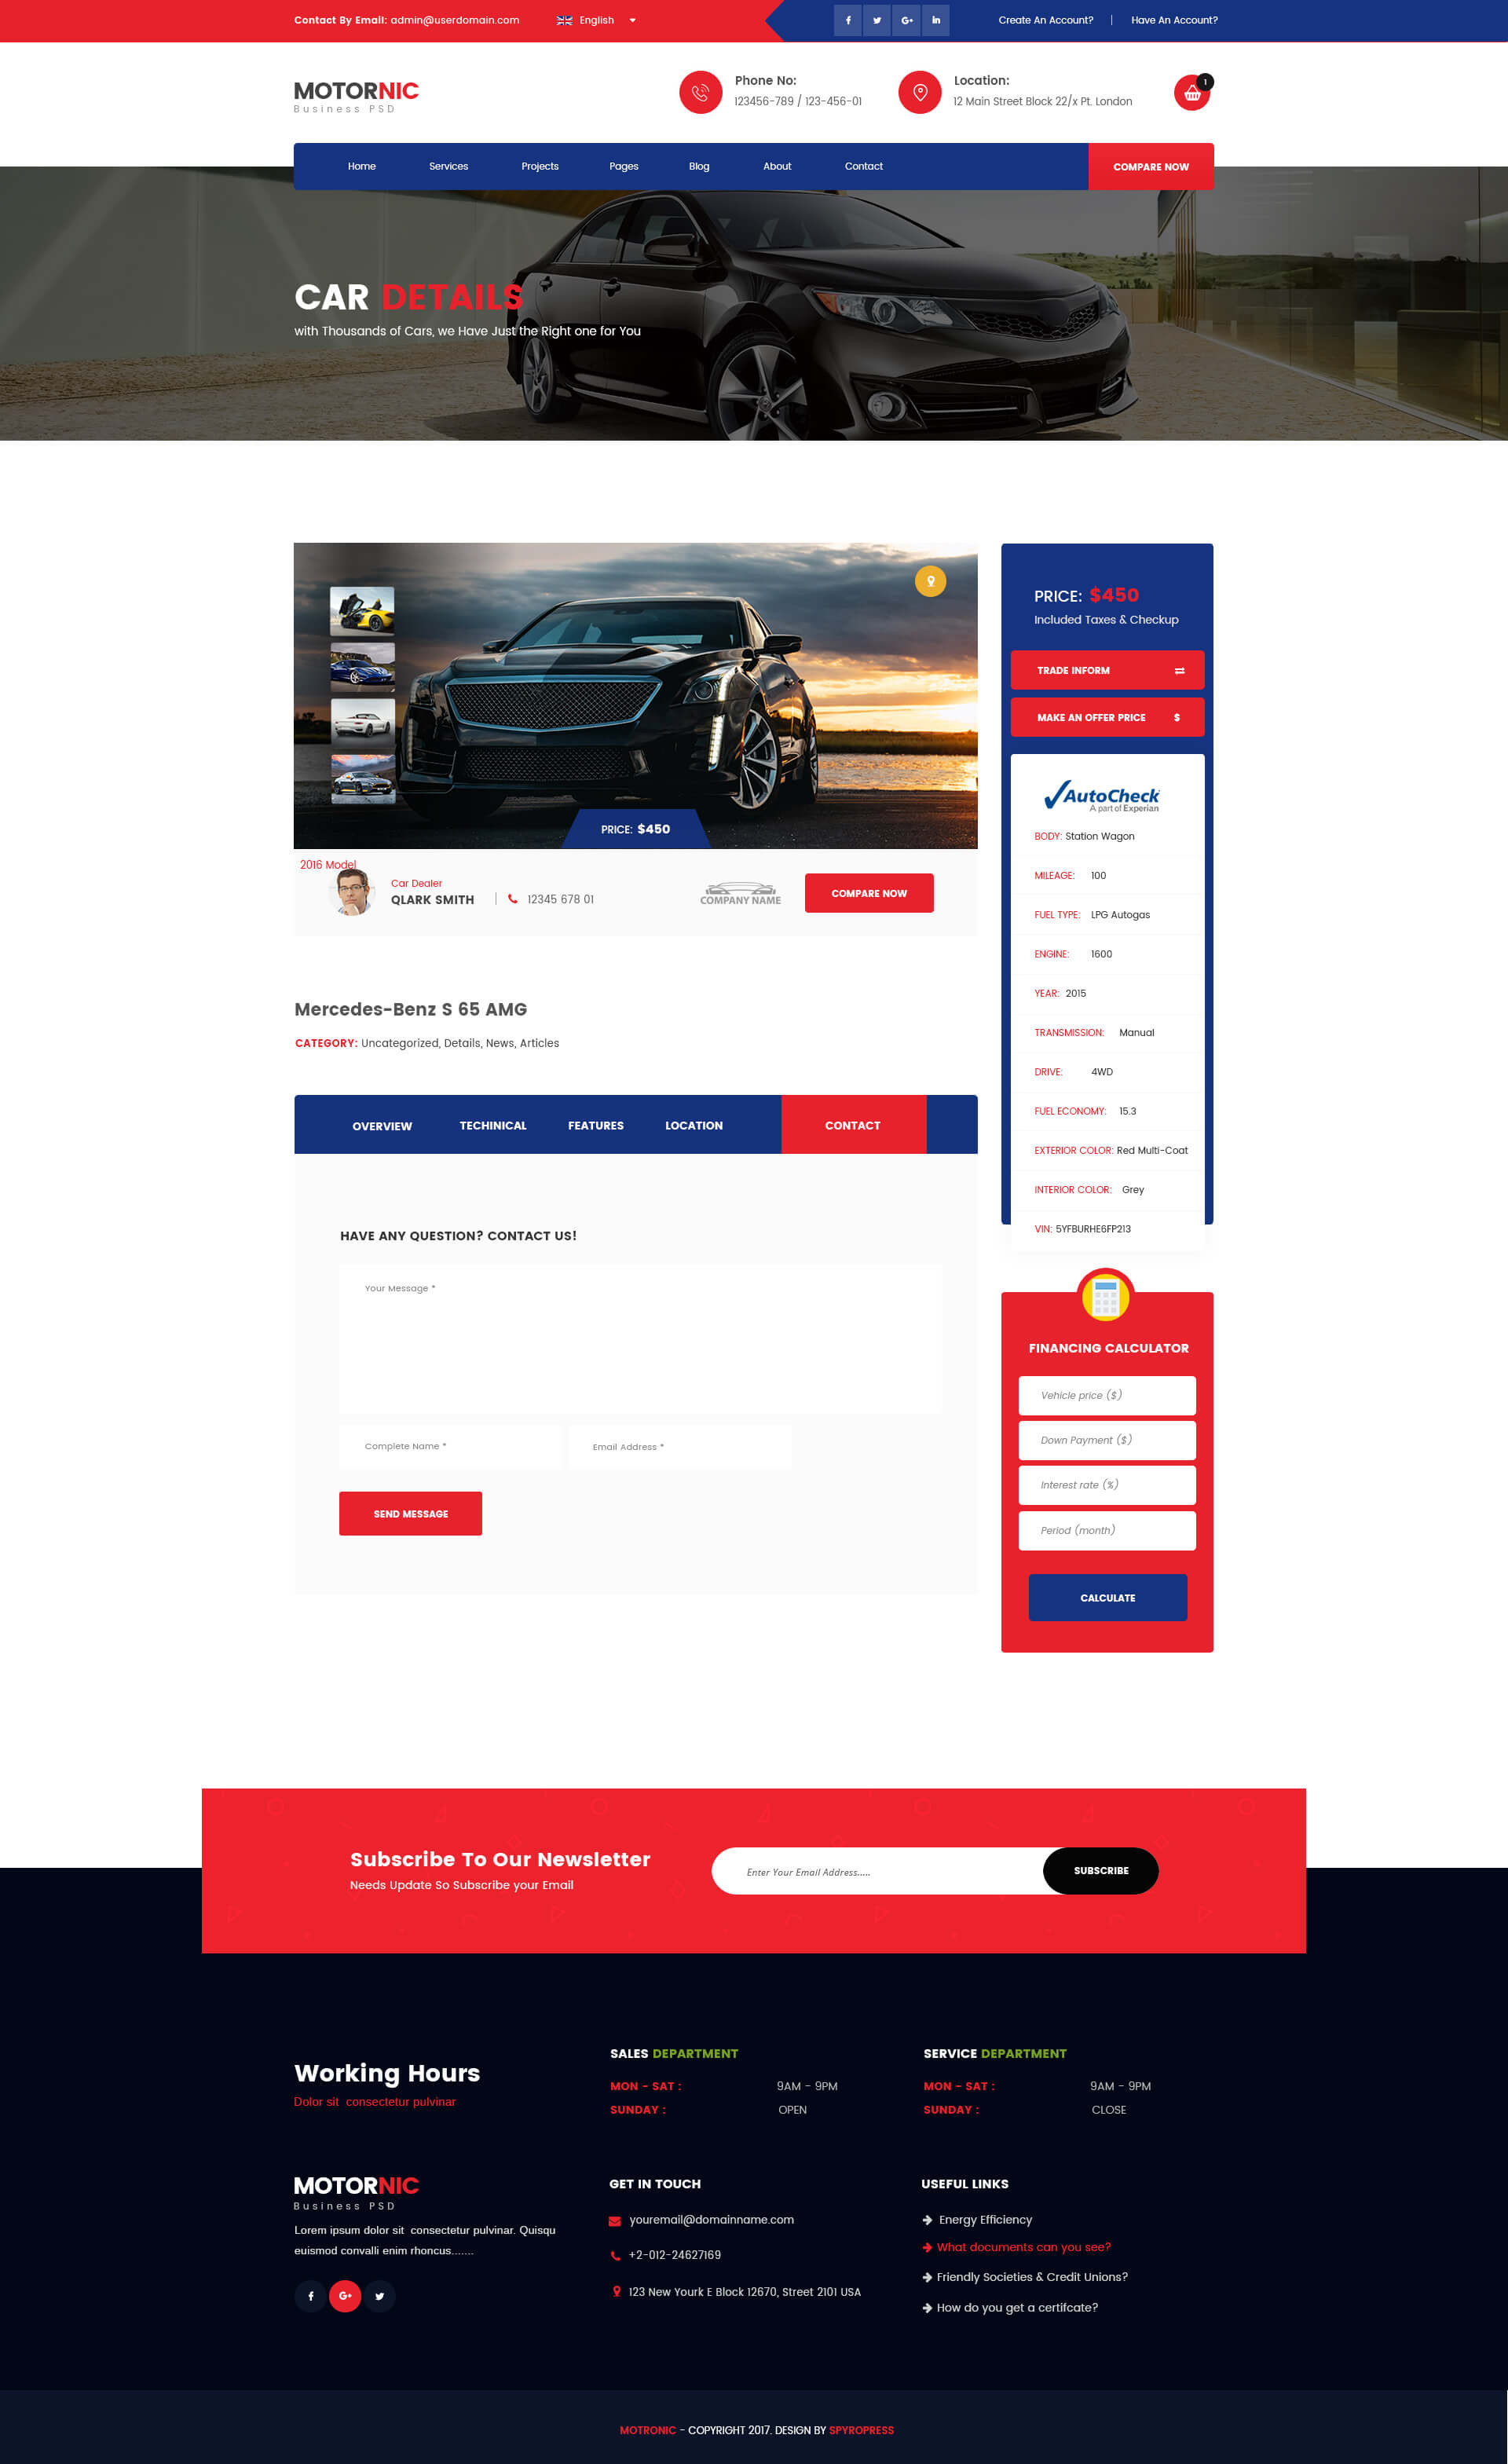 Car Dealer Website Template Free Unique Design 20 Business Of Business Card Website Template